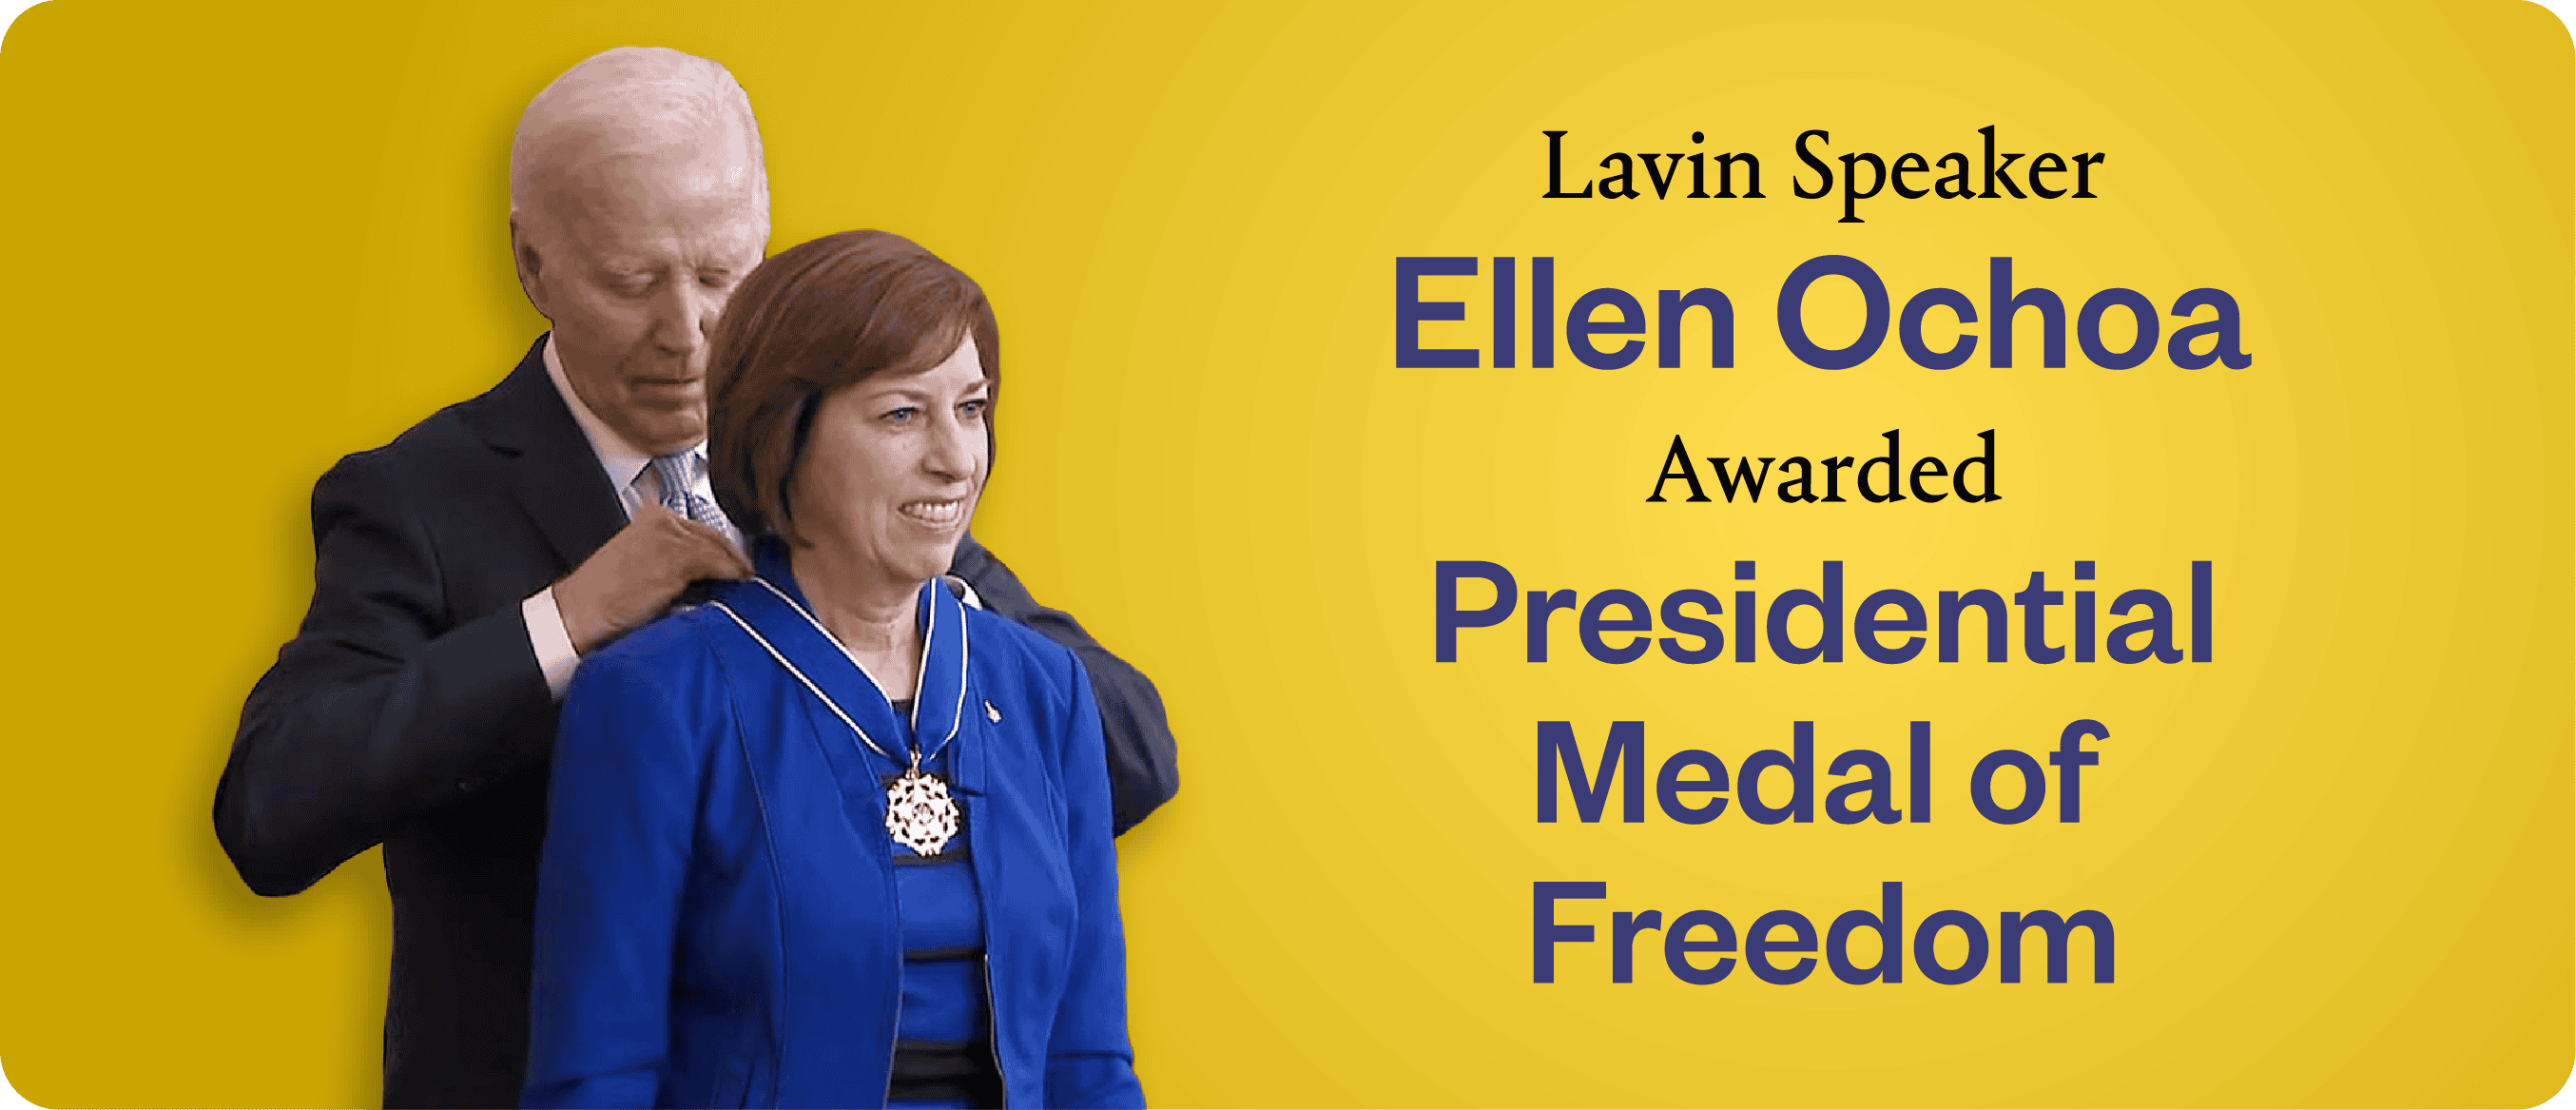 Presidential Medal of Freedom Awarded to Lavin Speaker Ellen Ochoa, First Latina in Space